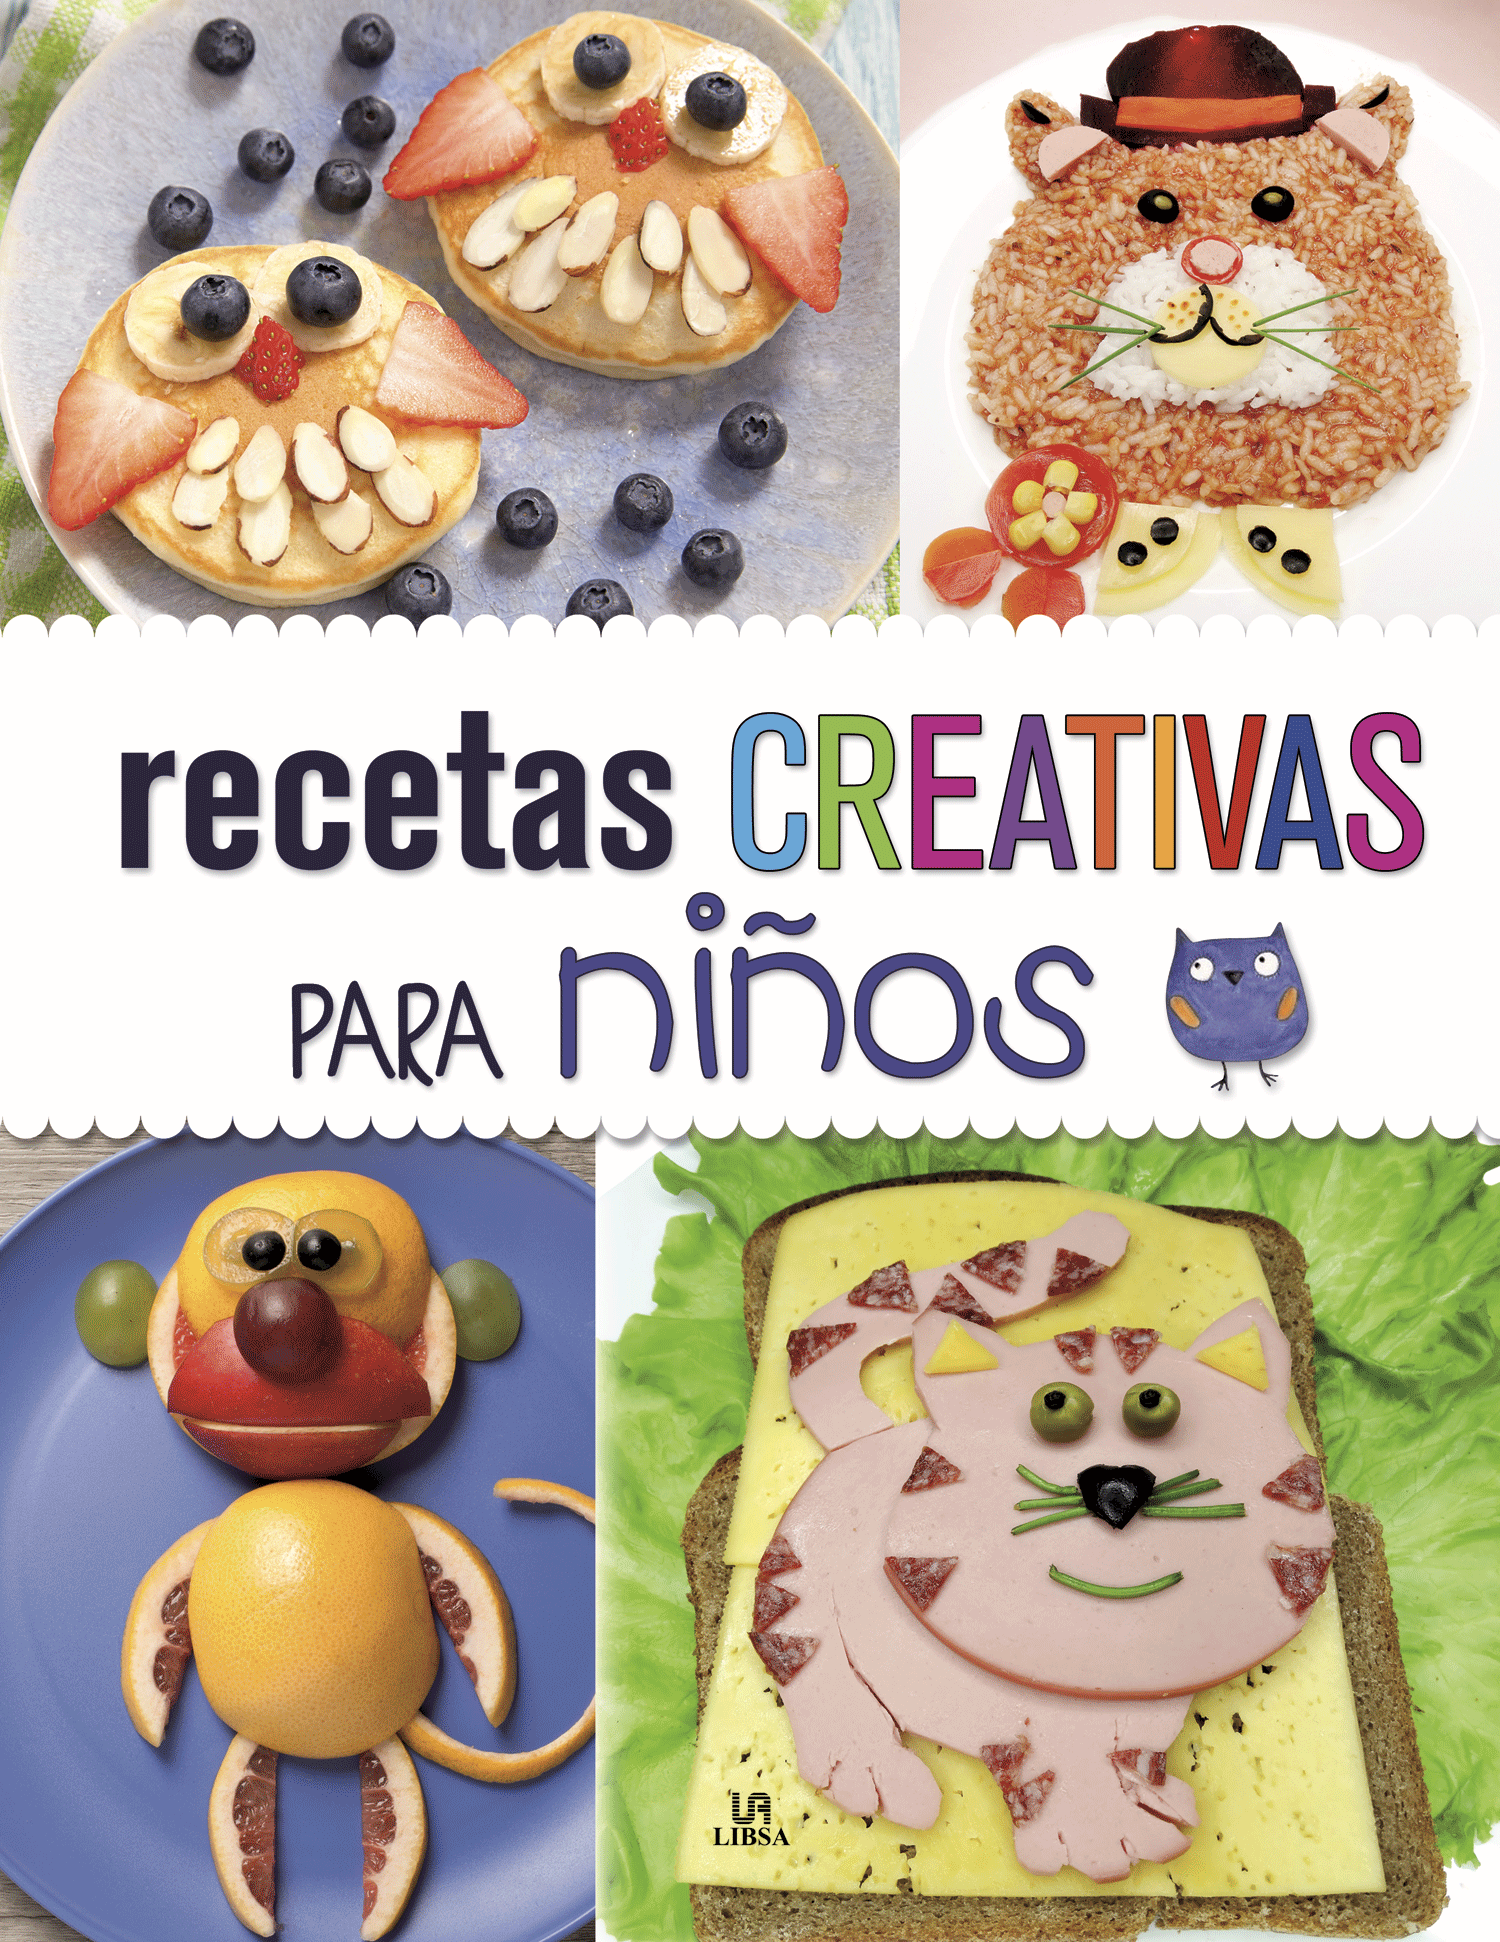 Recetas Creativas para Niños – COCINA CREATIVA – Libsa